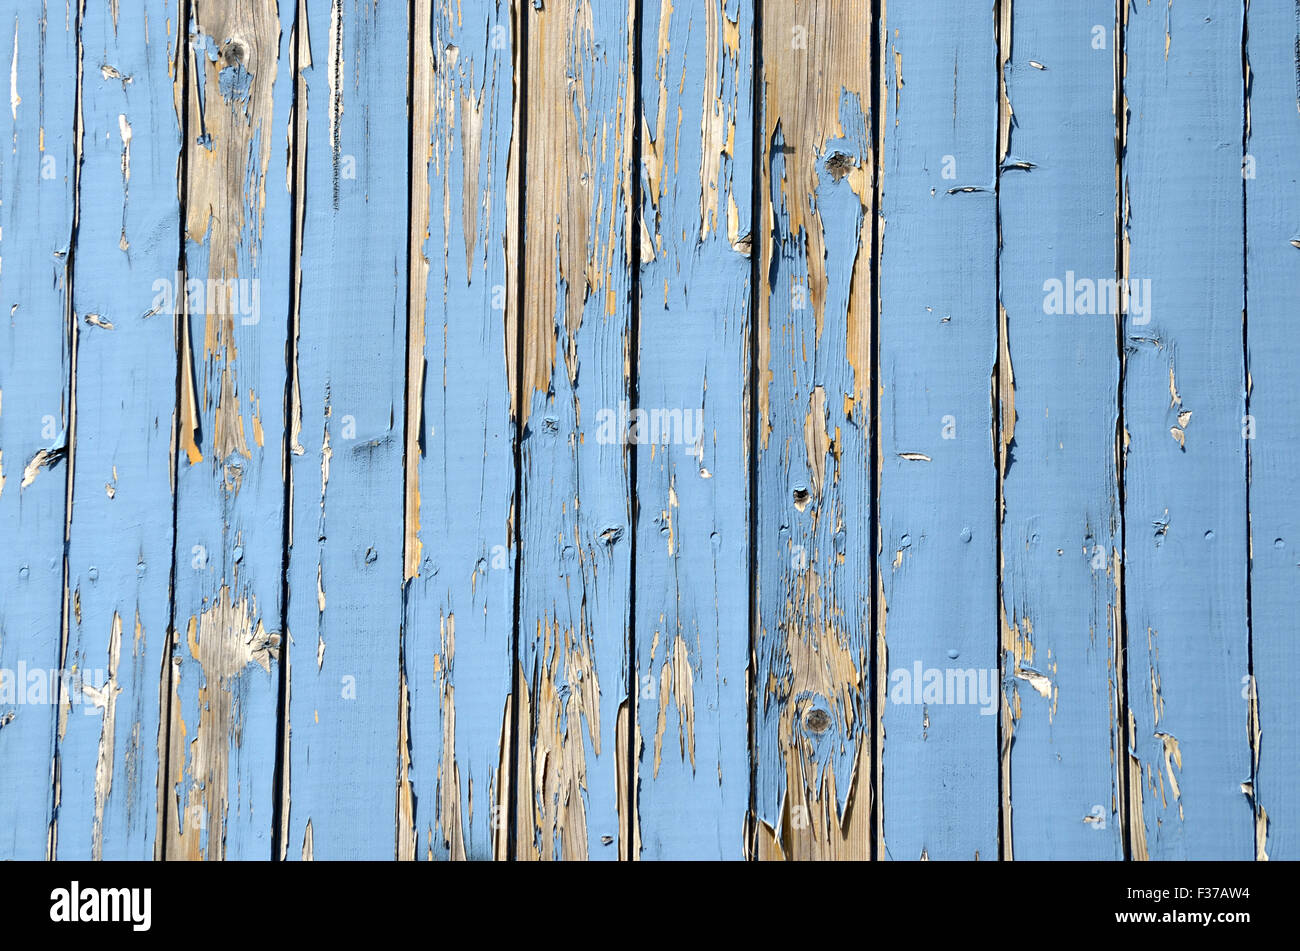 Wall made of light blue wooden slats, paint peeling off Stock Photo